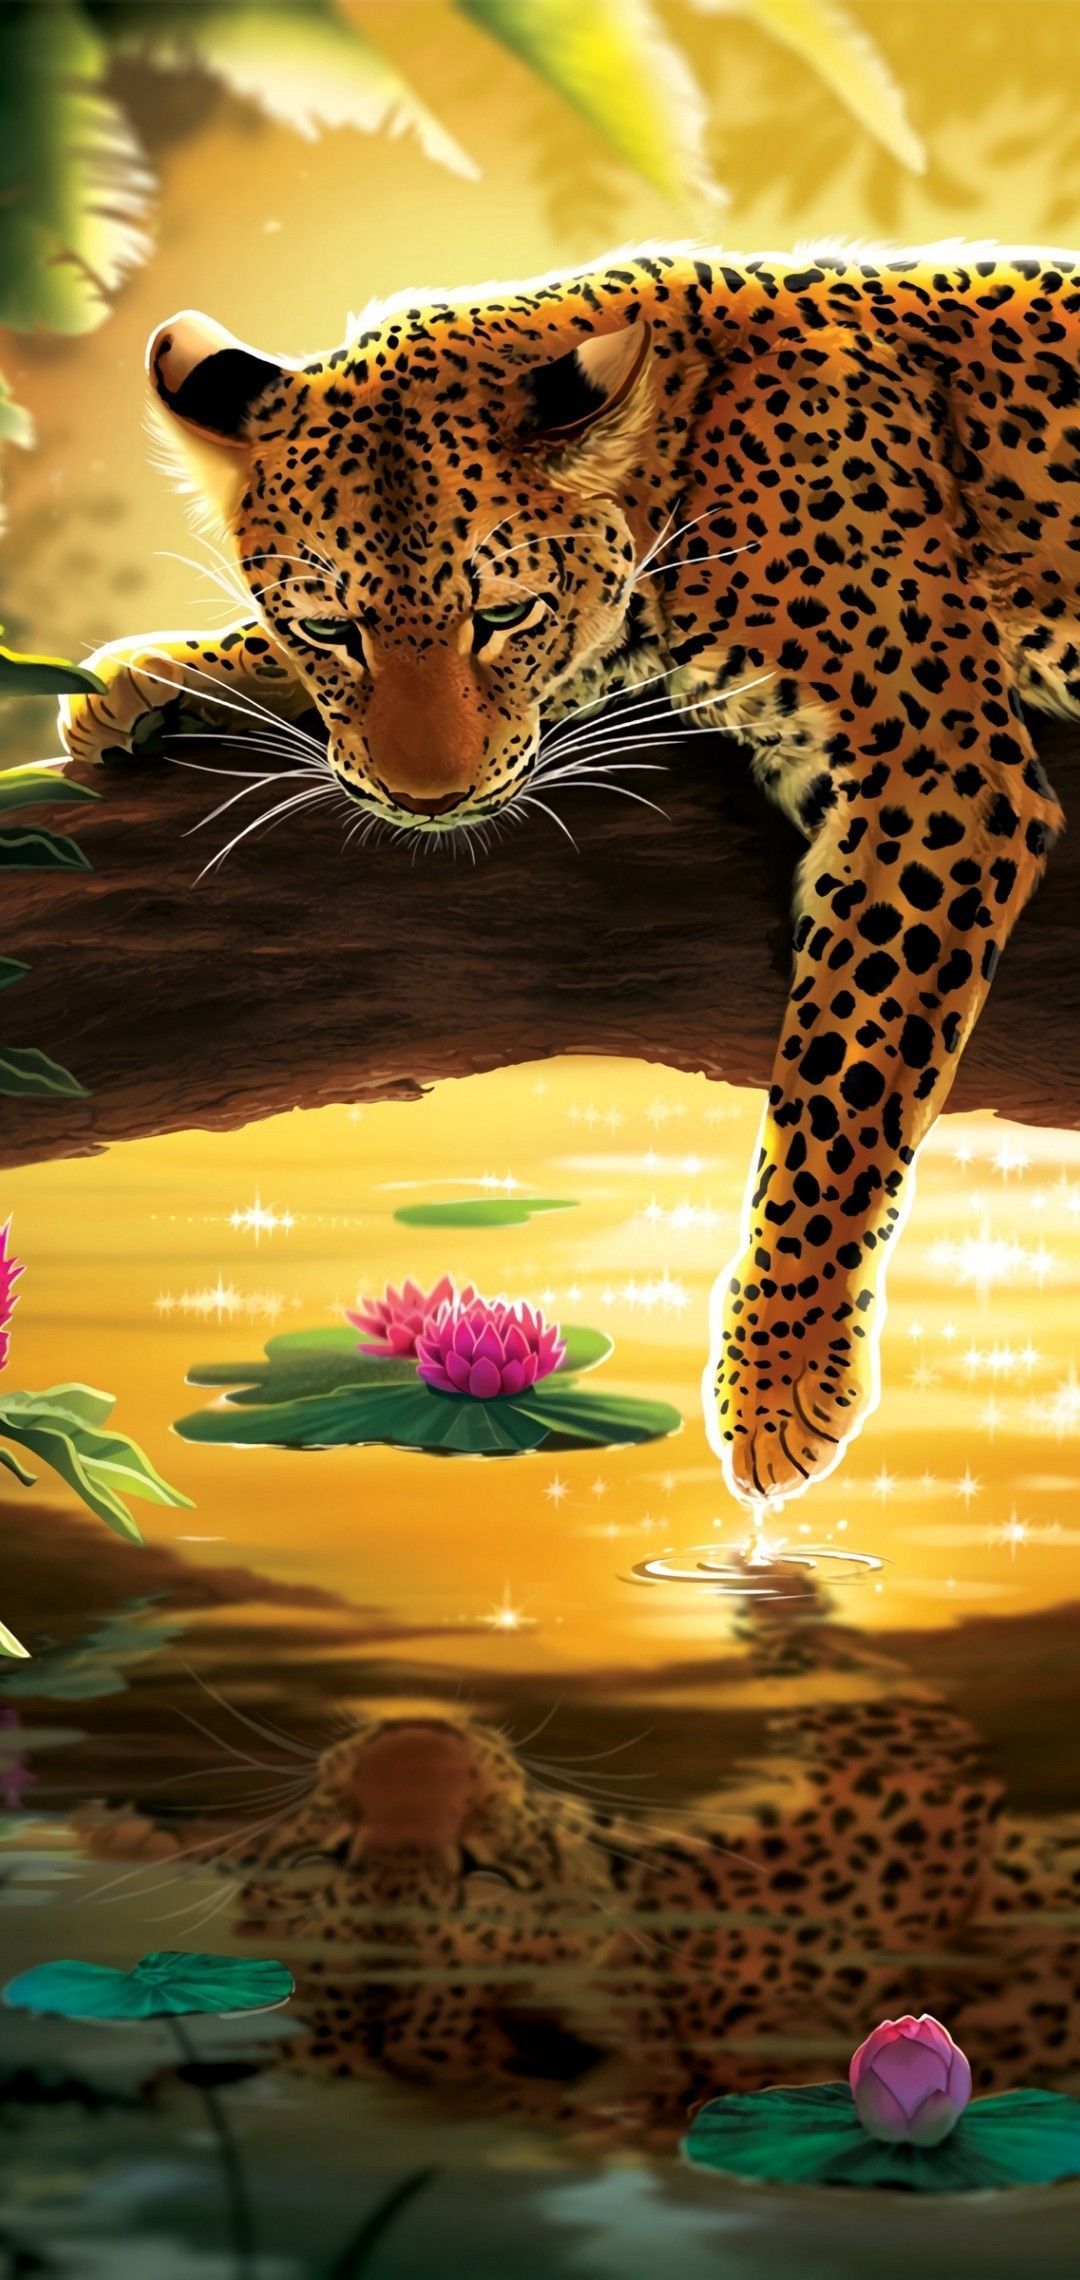  Tiere Hintergrundbild 1080x2280. Leopard wallpaper. Картины, Обои, Живопись